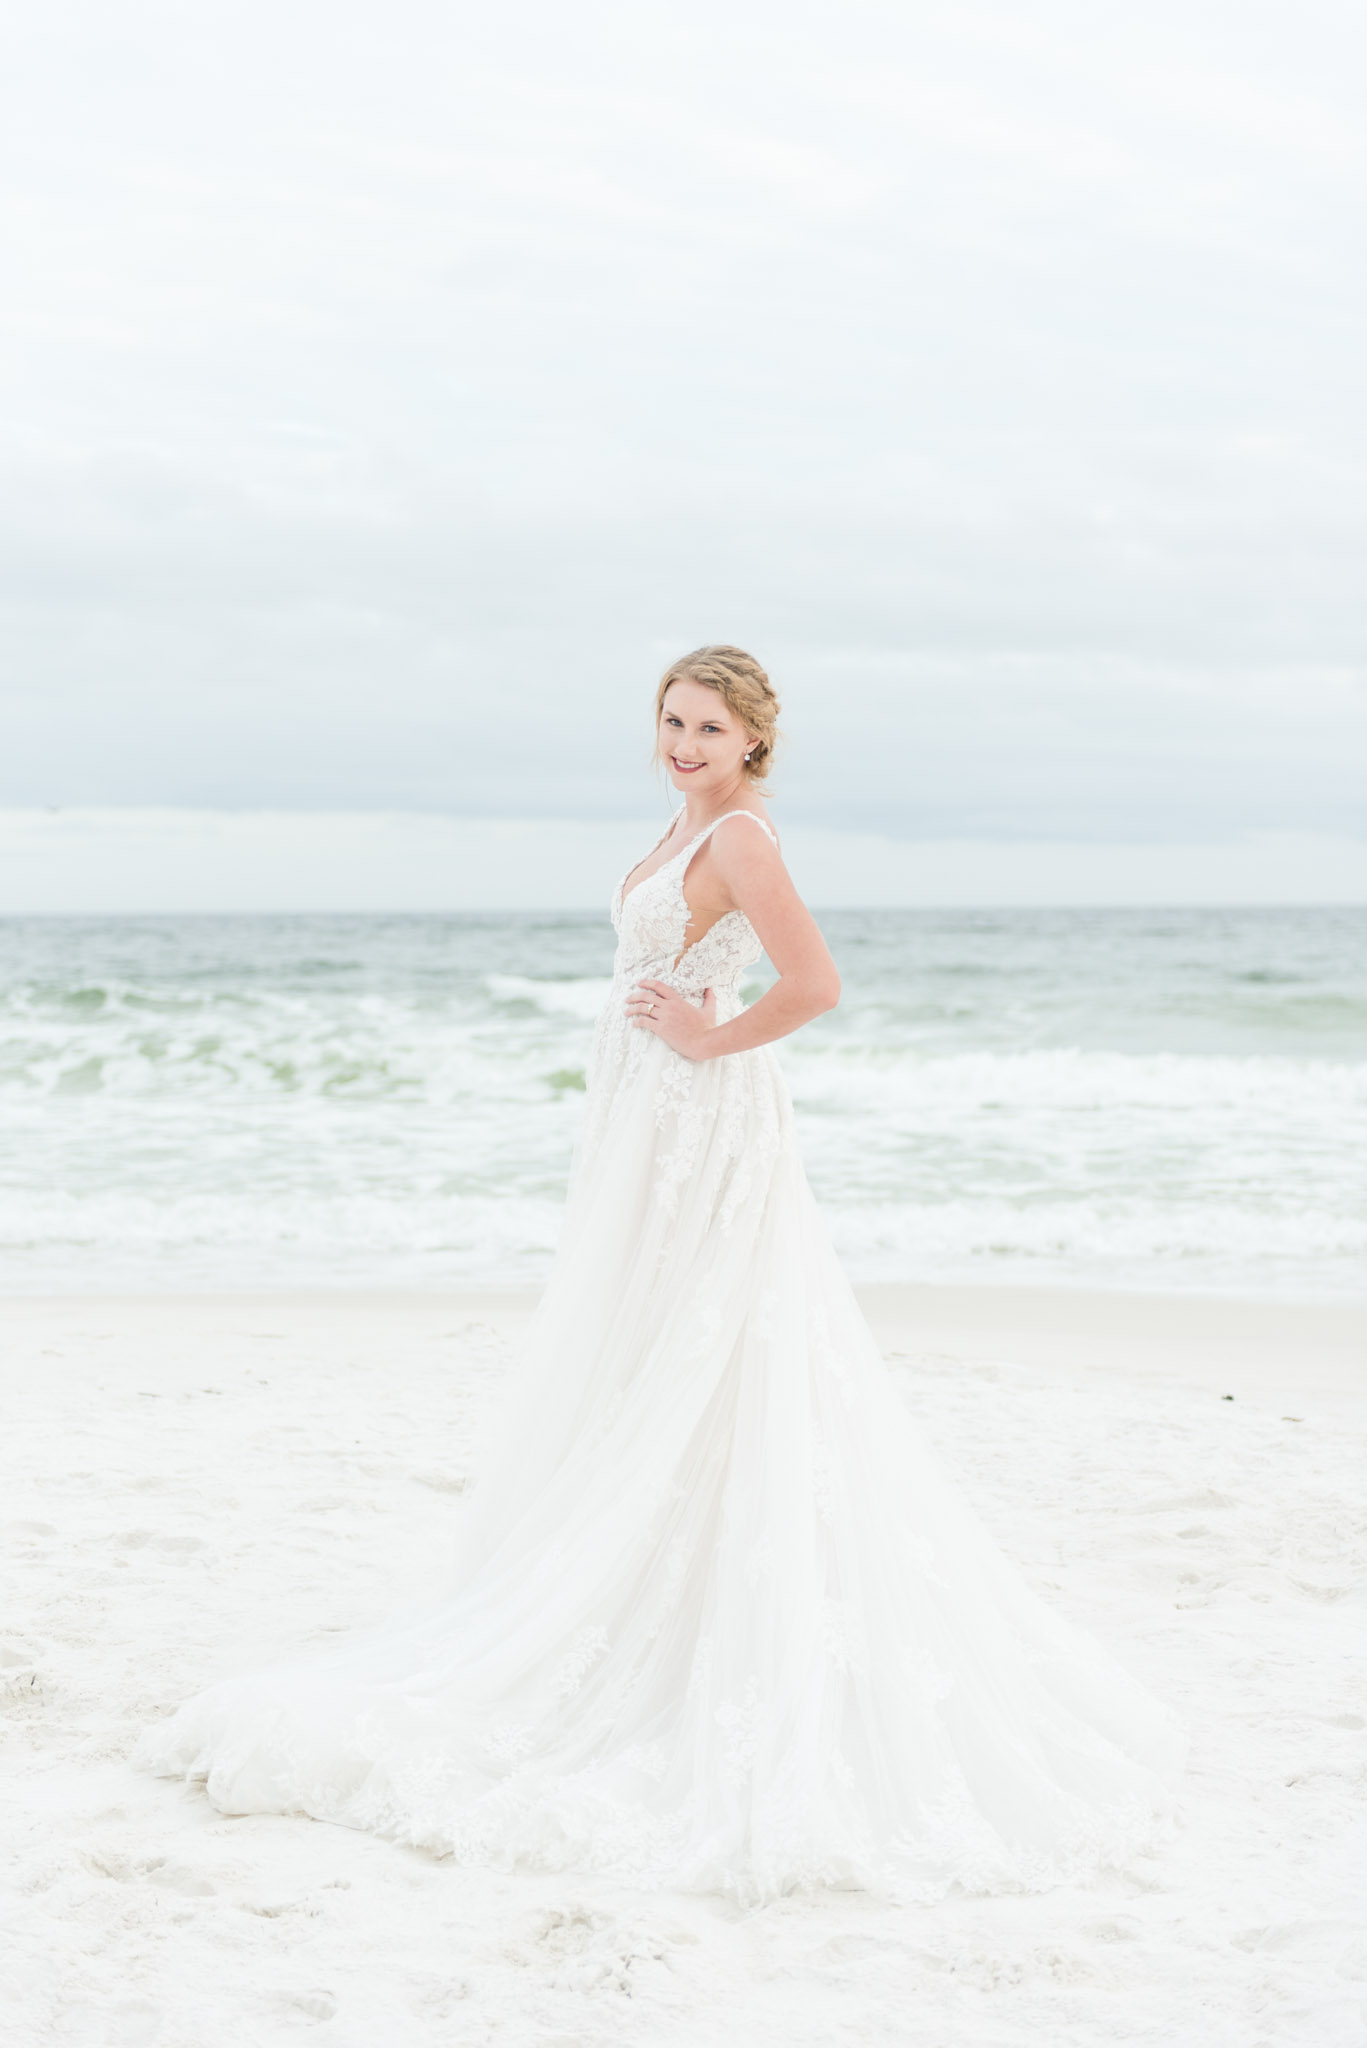 Bride looks over shoulder on beach